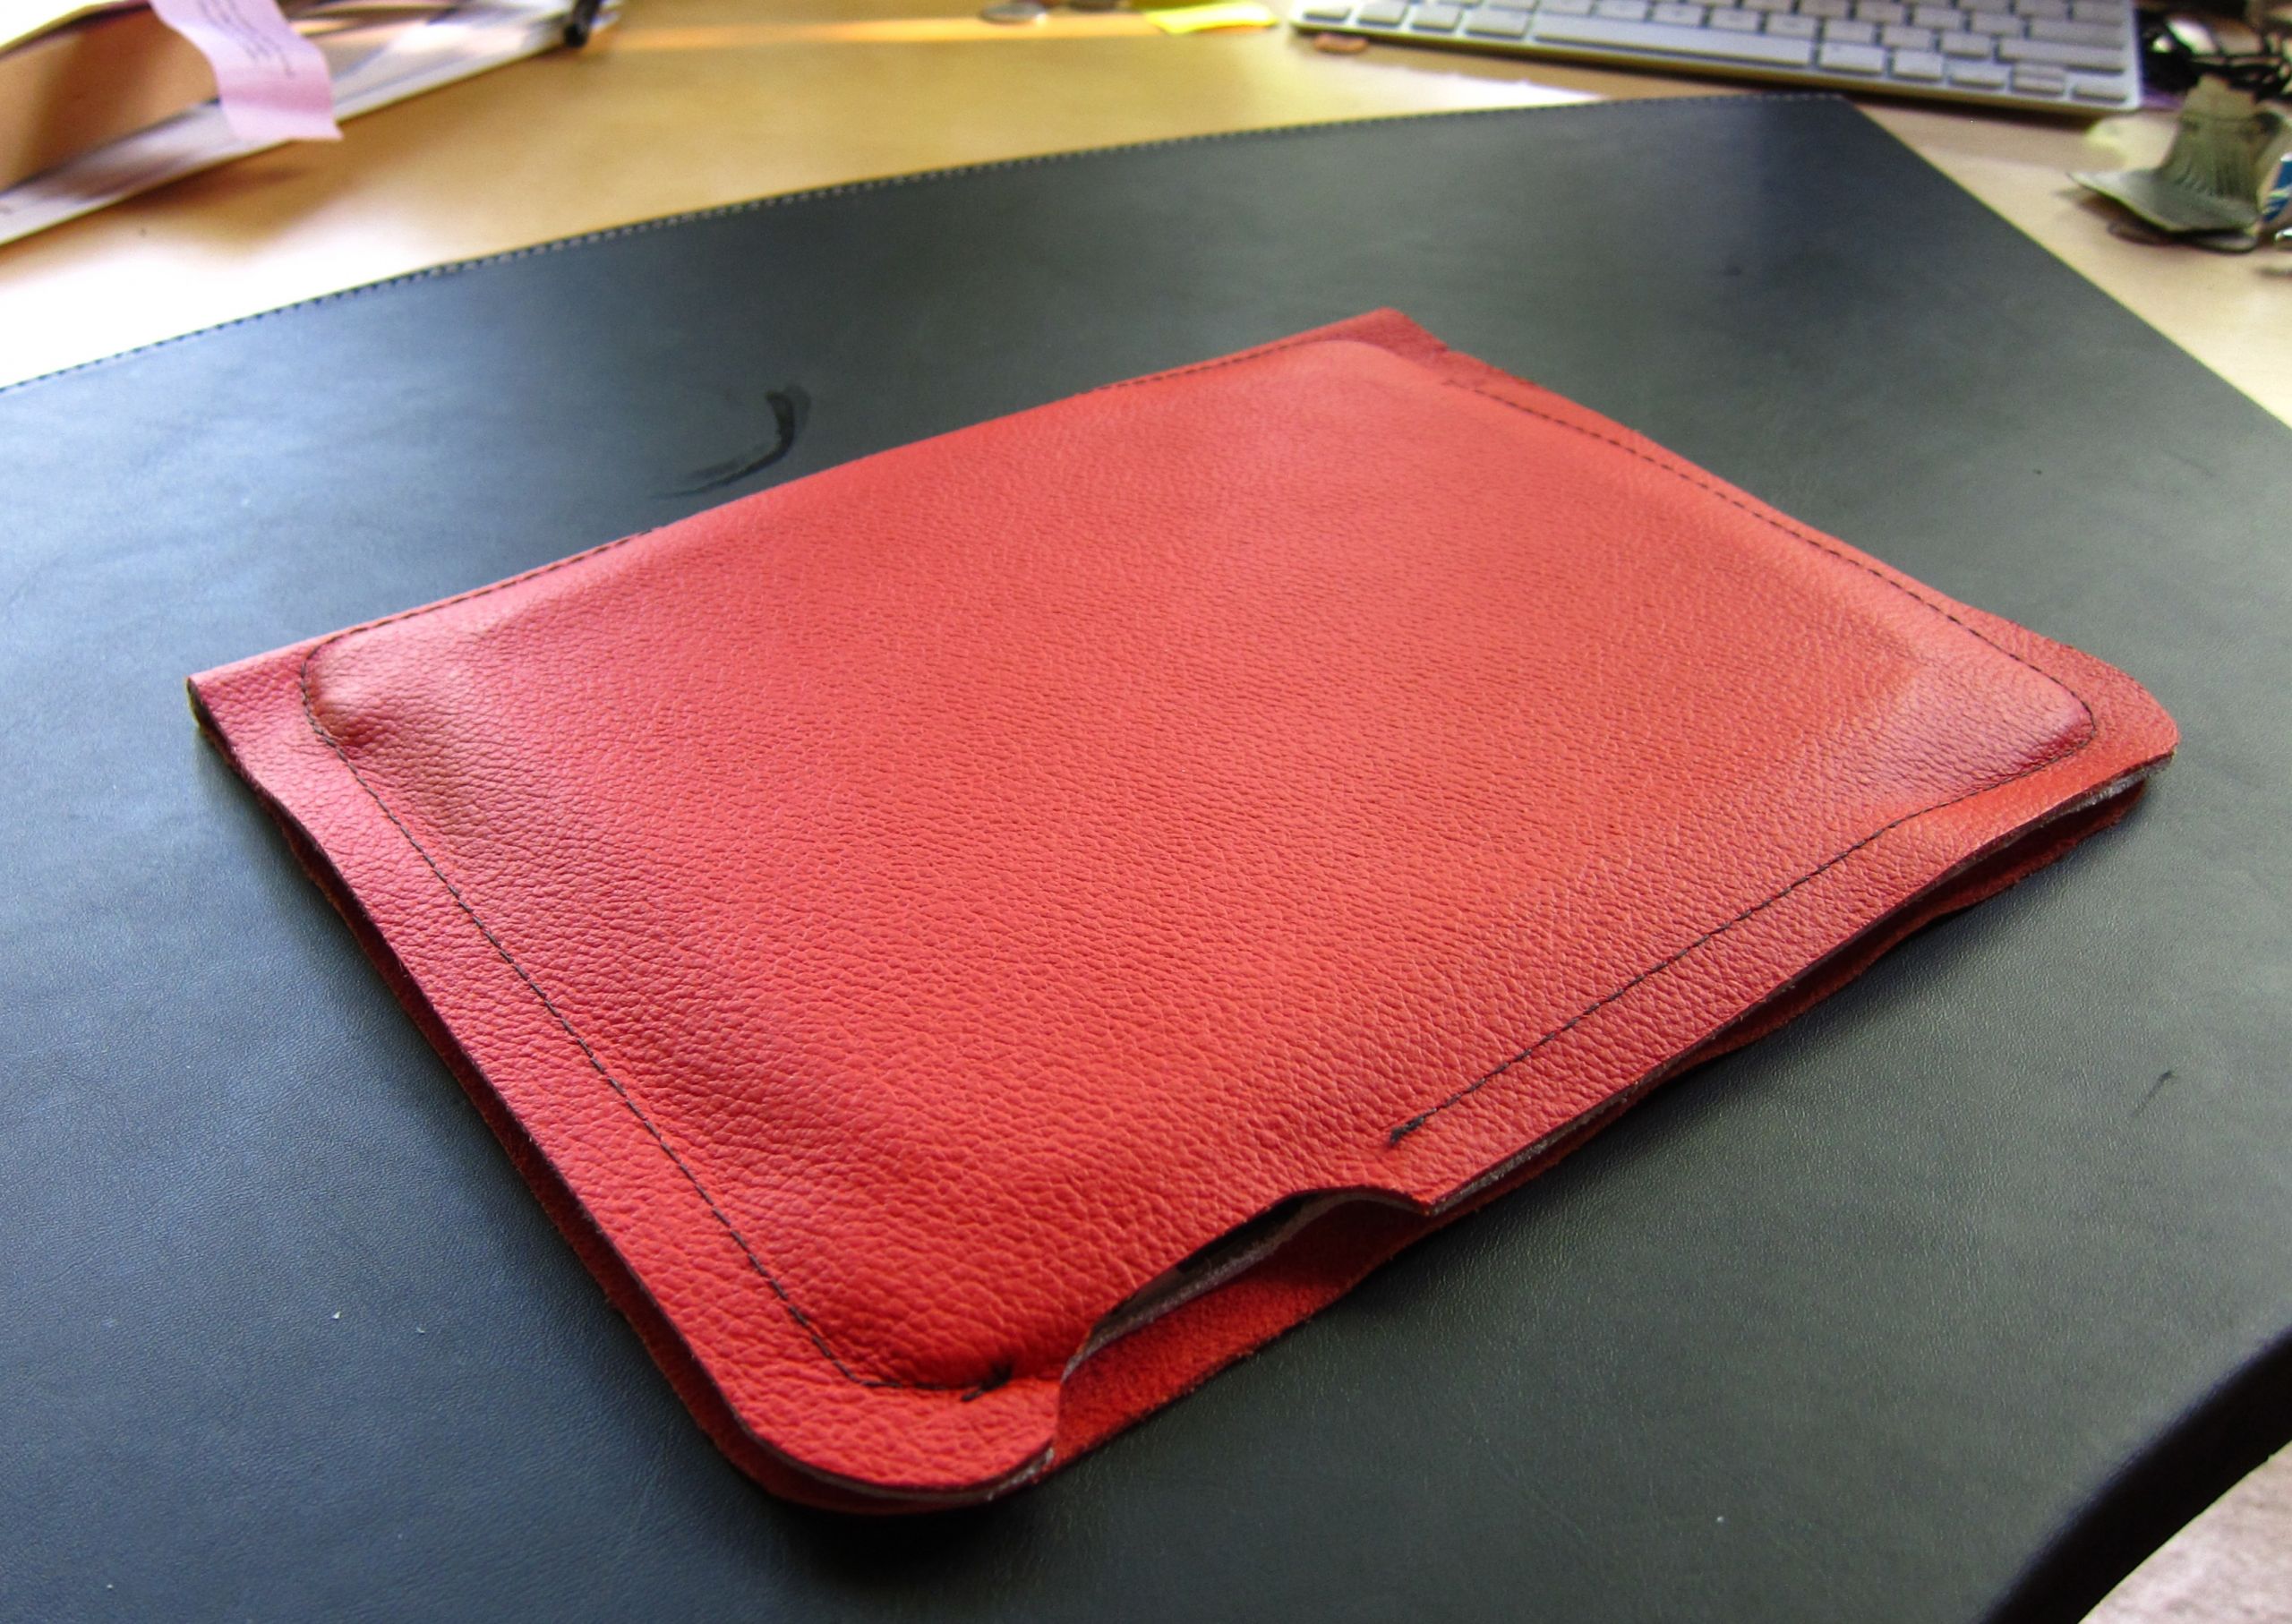 Veranda Castorama Élégant Custom Leather Case Designed and Made for the Ipad